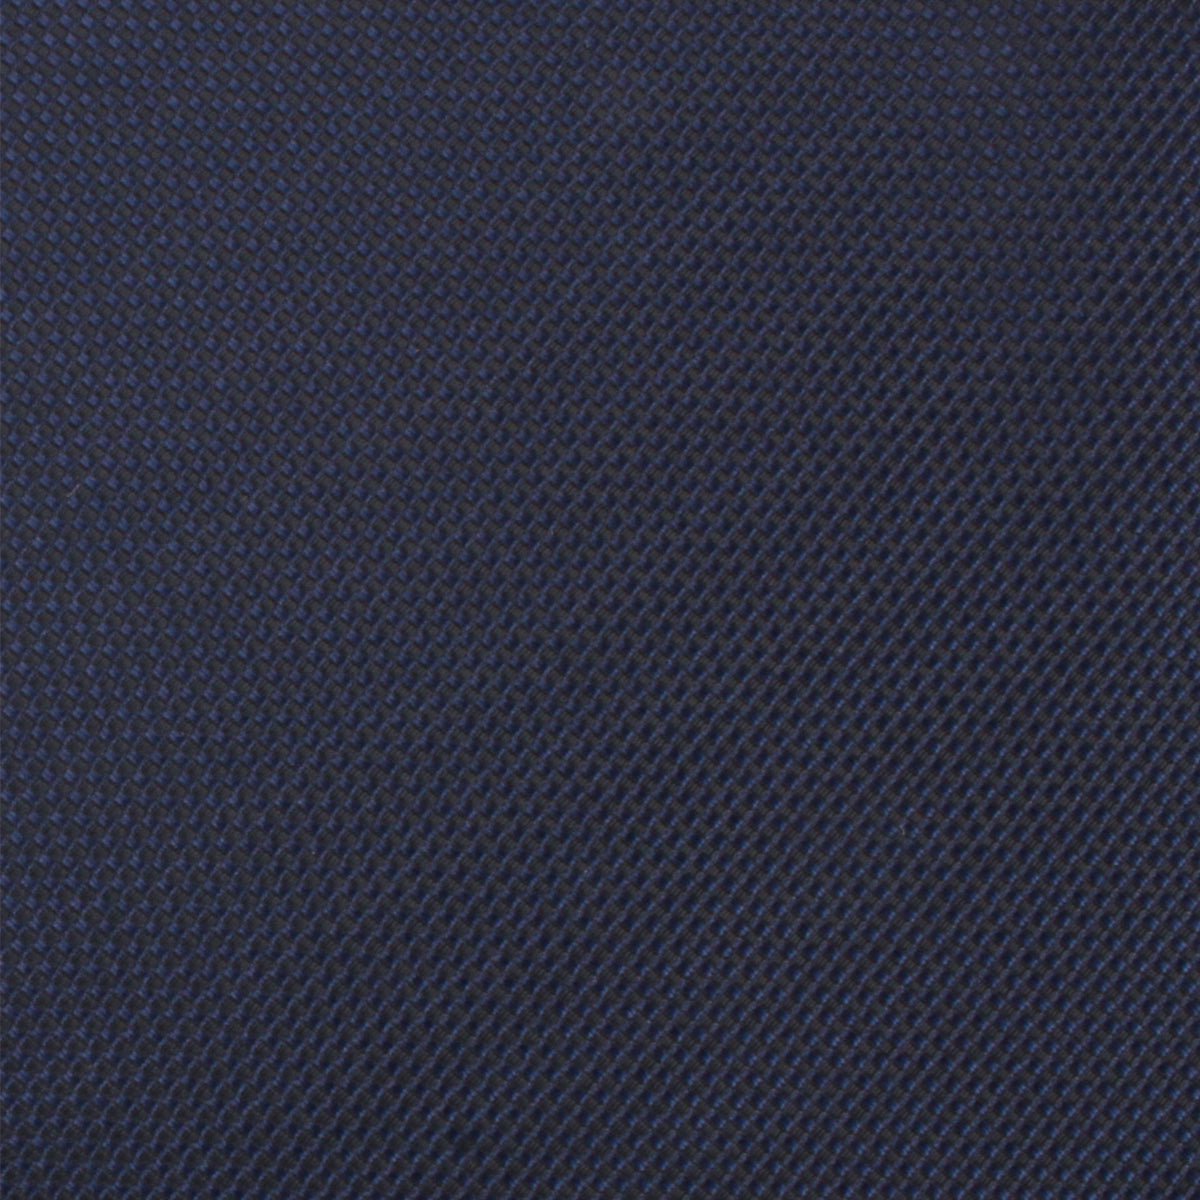 Navy Blue Oxford Stitch Pocket Square Fabric